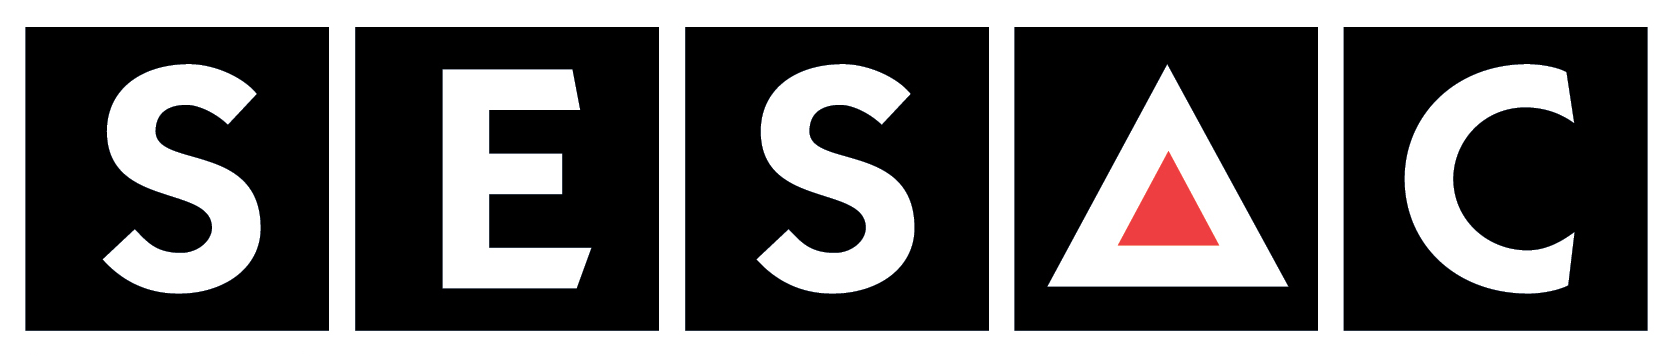 sesac logo